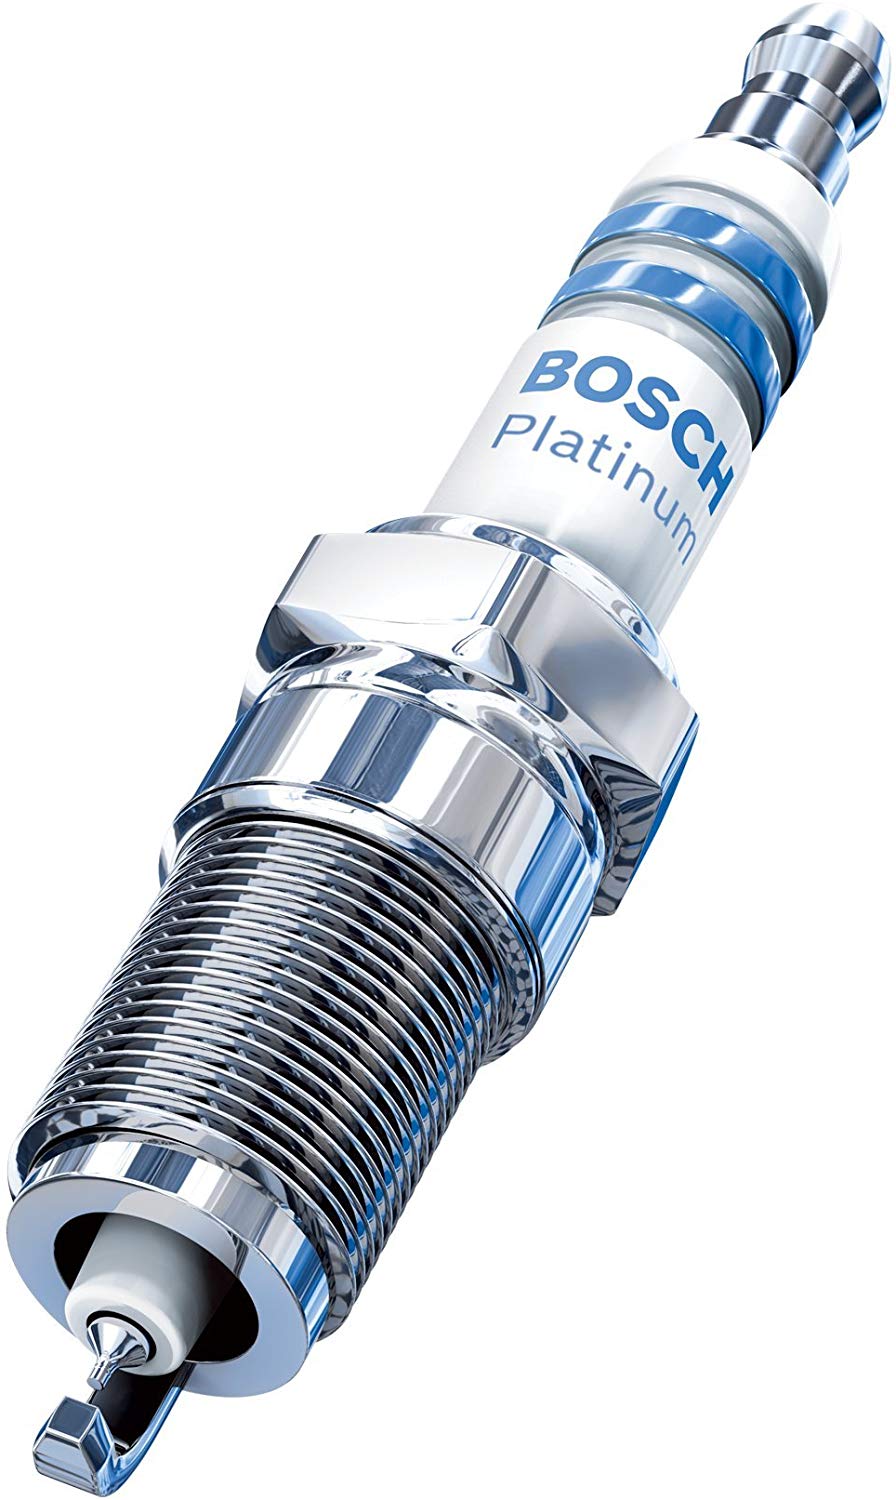 Bosch 6702 Platinum Spark Plug for Select Chrysler, Dodge, Honda, Hyundai, Infiniti, Isuzu, Jaguar, Kia, Land Rover, Mercedes, Mitsubishi, Nissan, Saturn, Subaru, Suzuki, Toyota, VW +More (Pack of 4)